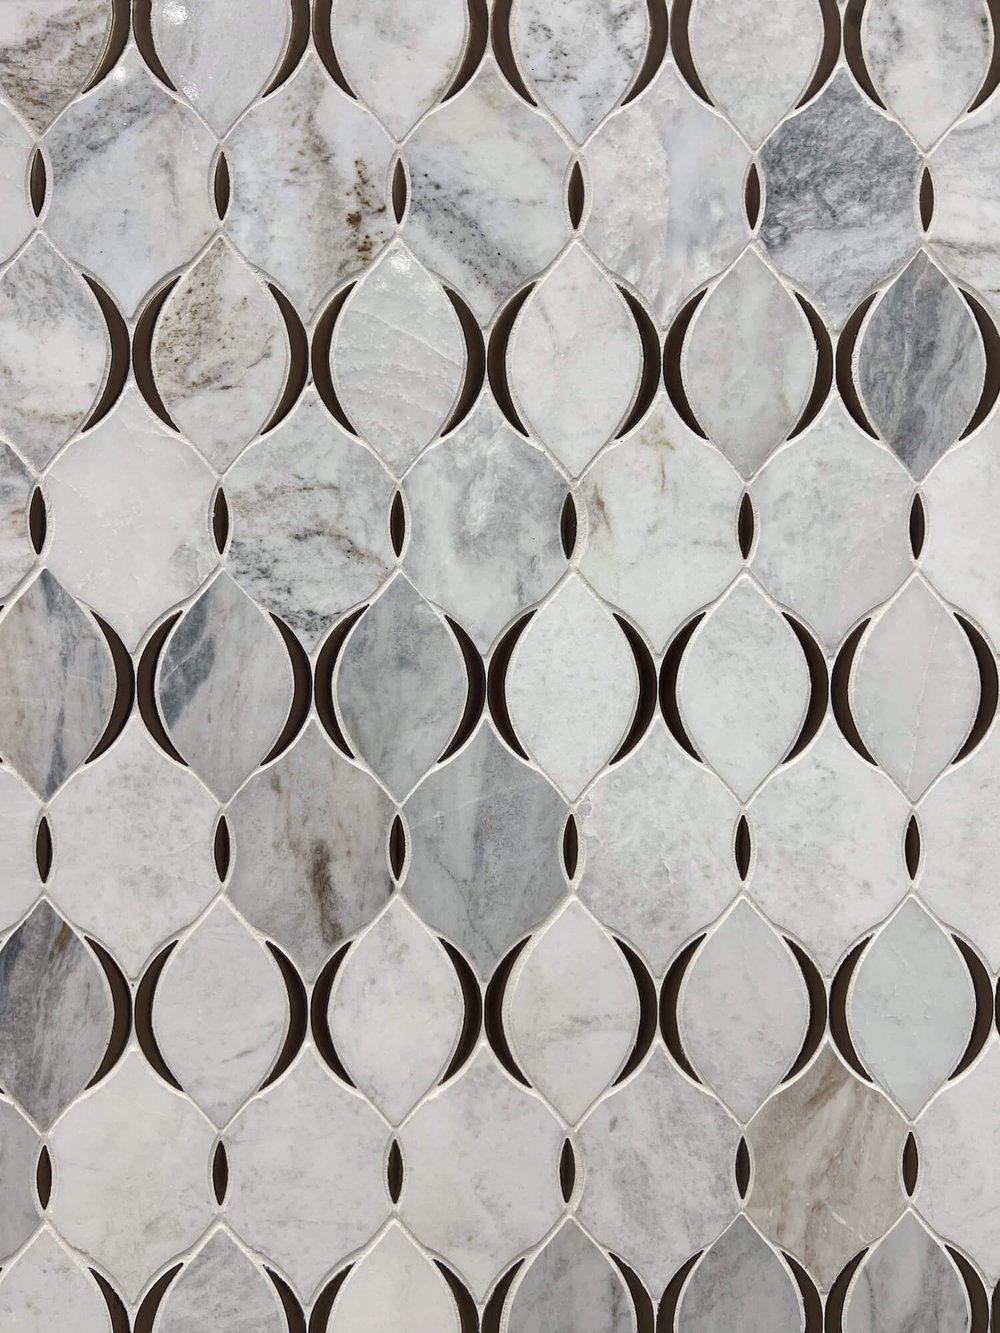 metallic and stone onion tile.JPG